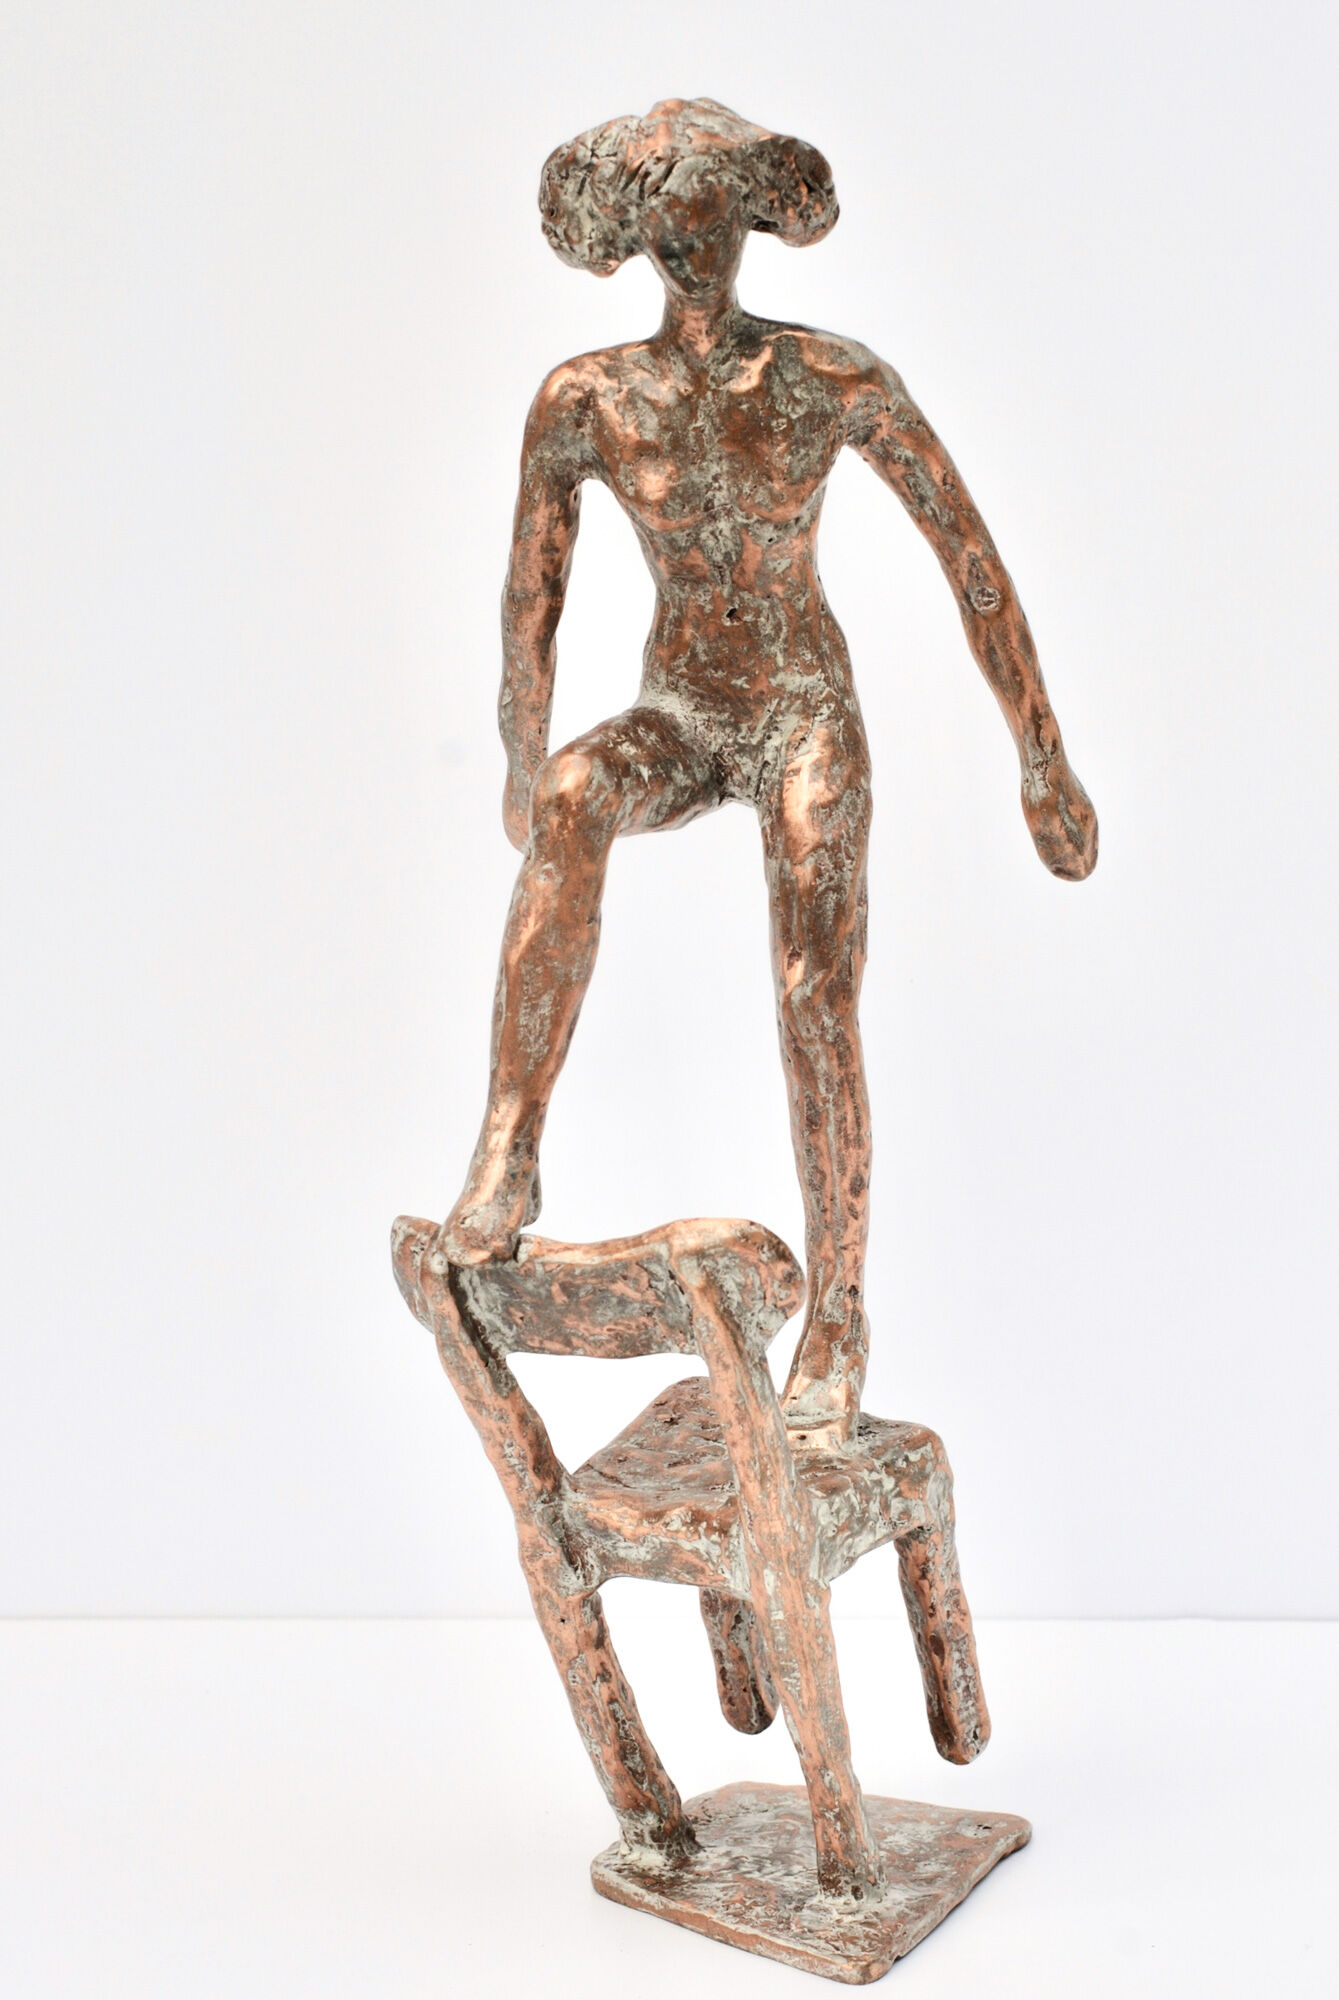 Skulptur "Pina - Joy" (2019), bronze von Dagmar Vogt